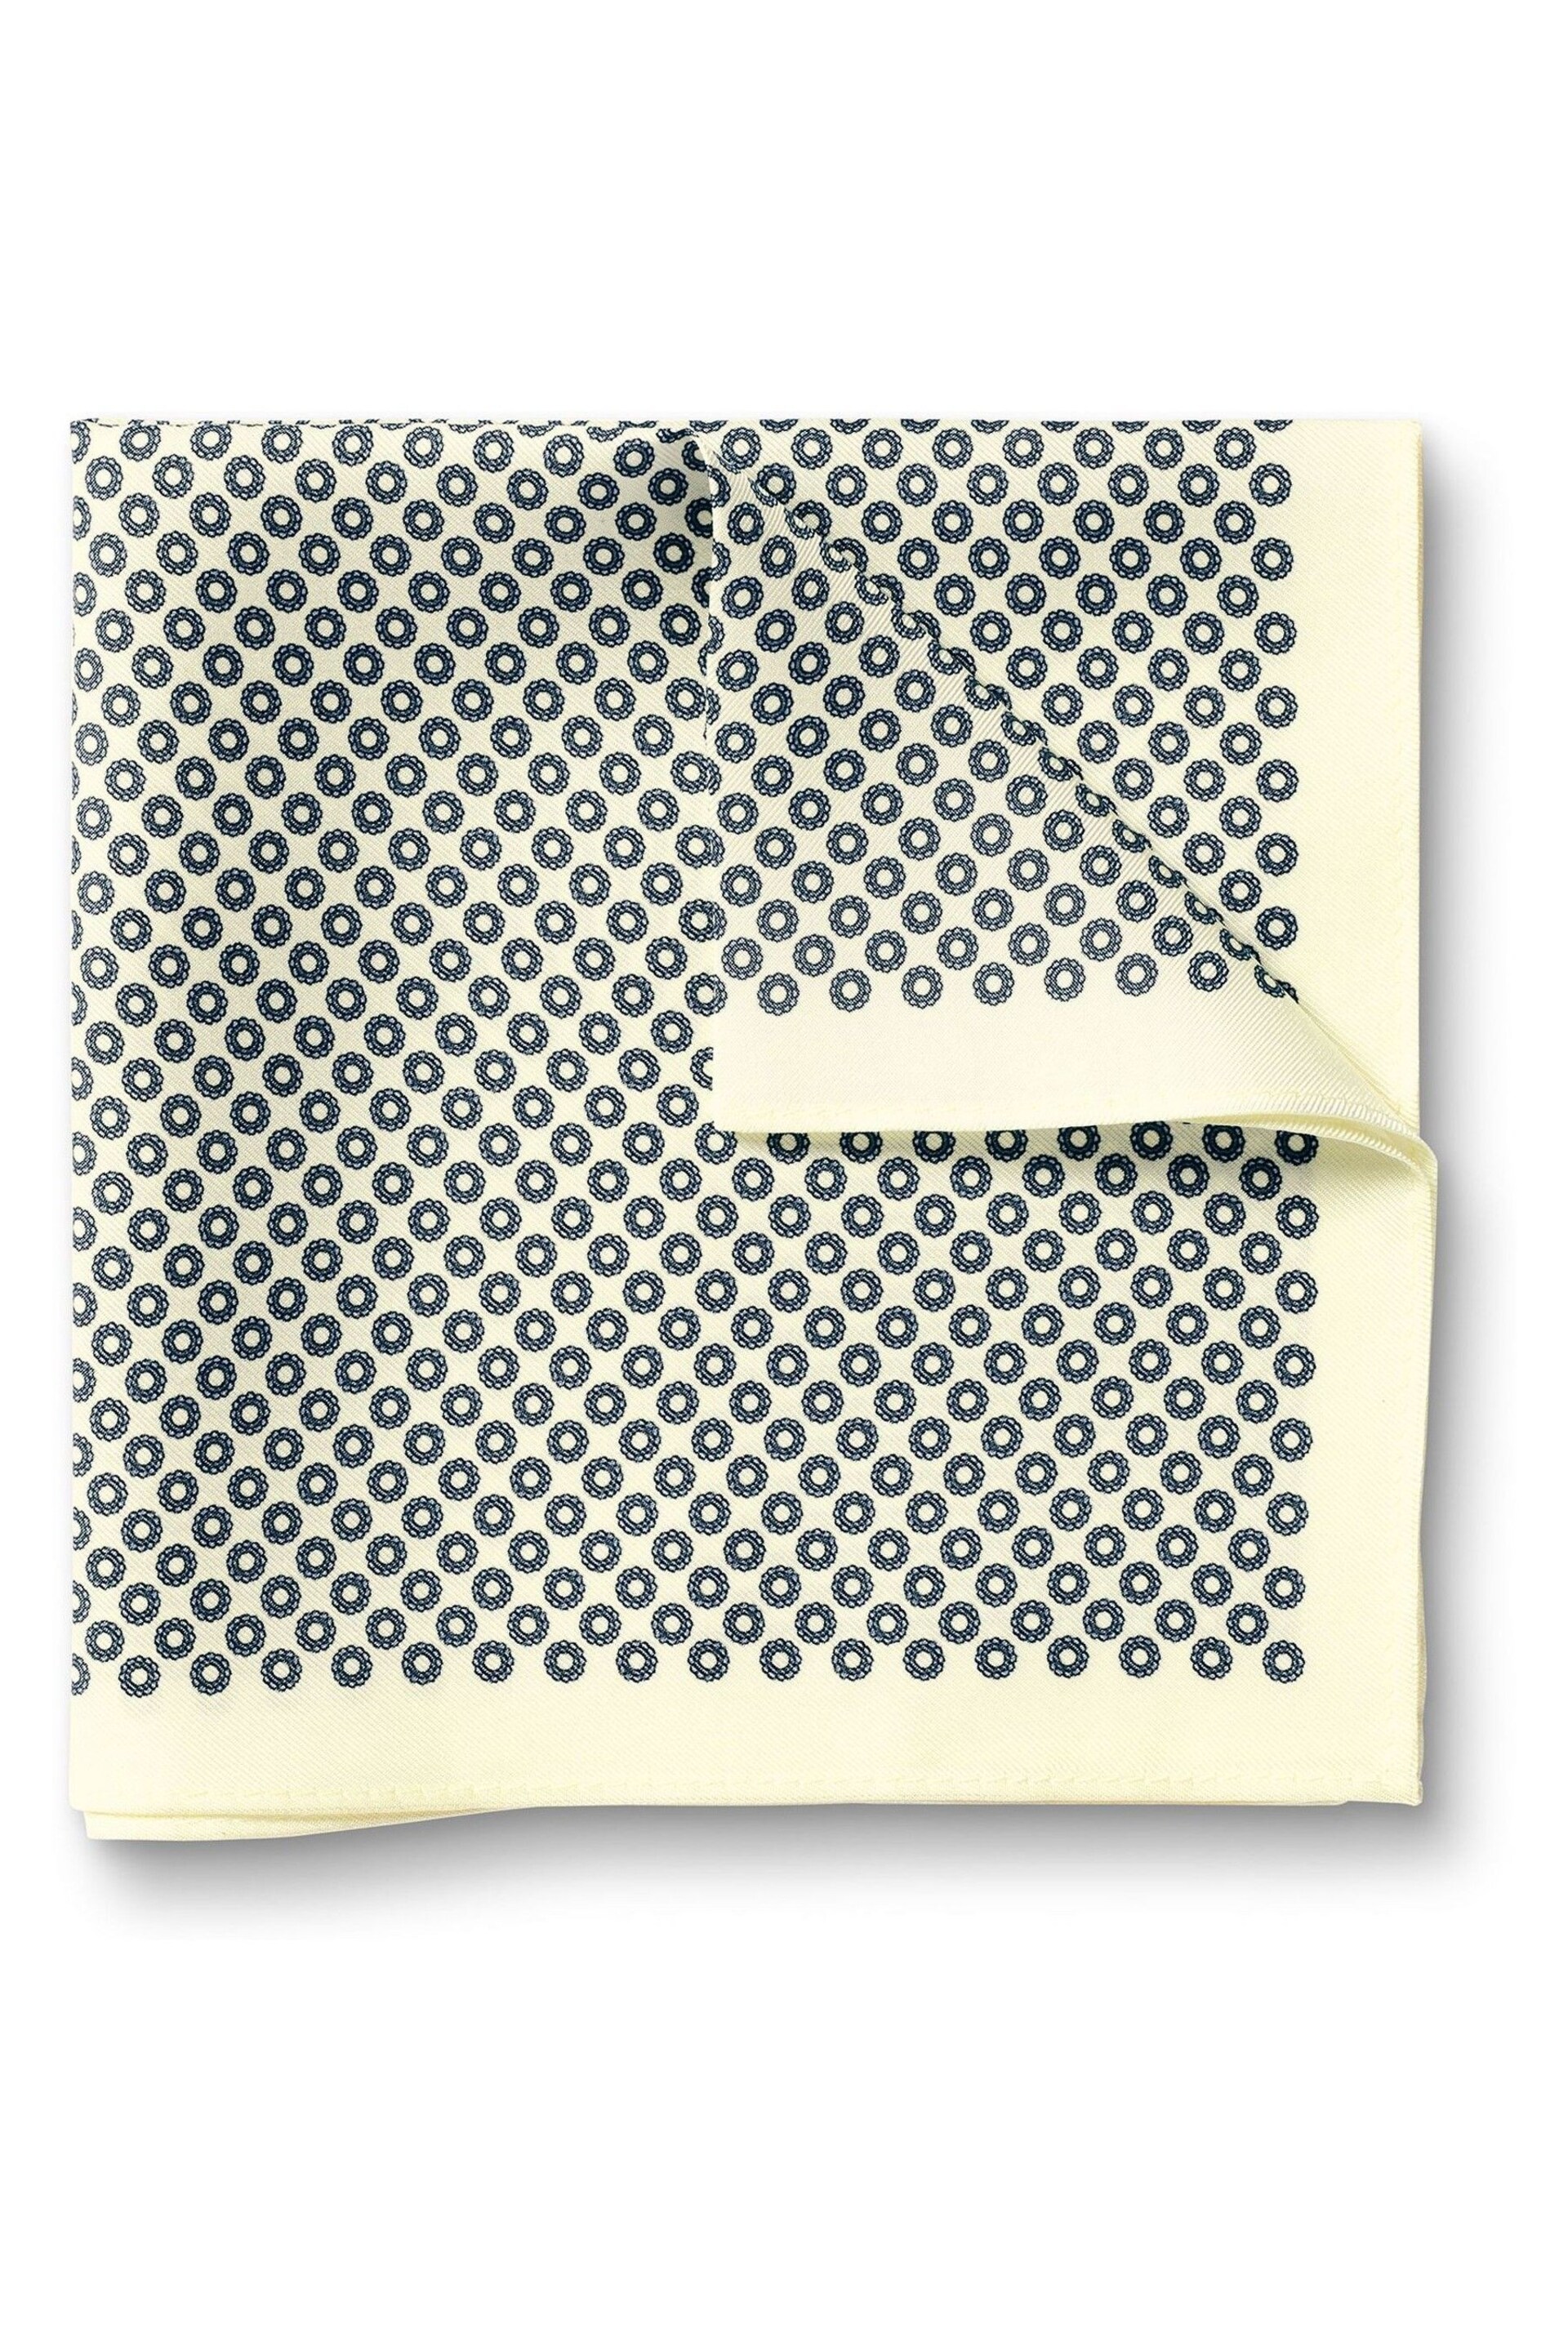 Charles Tyrwhitt Natural Circle Print Silk Pocket Square - Image 1 of 2